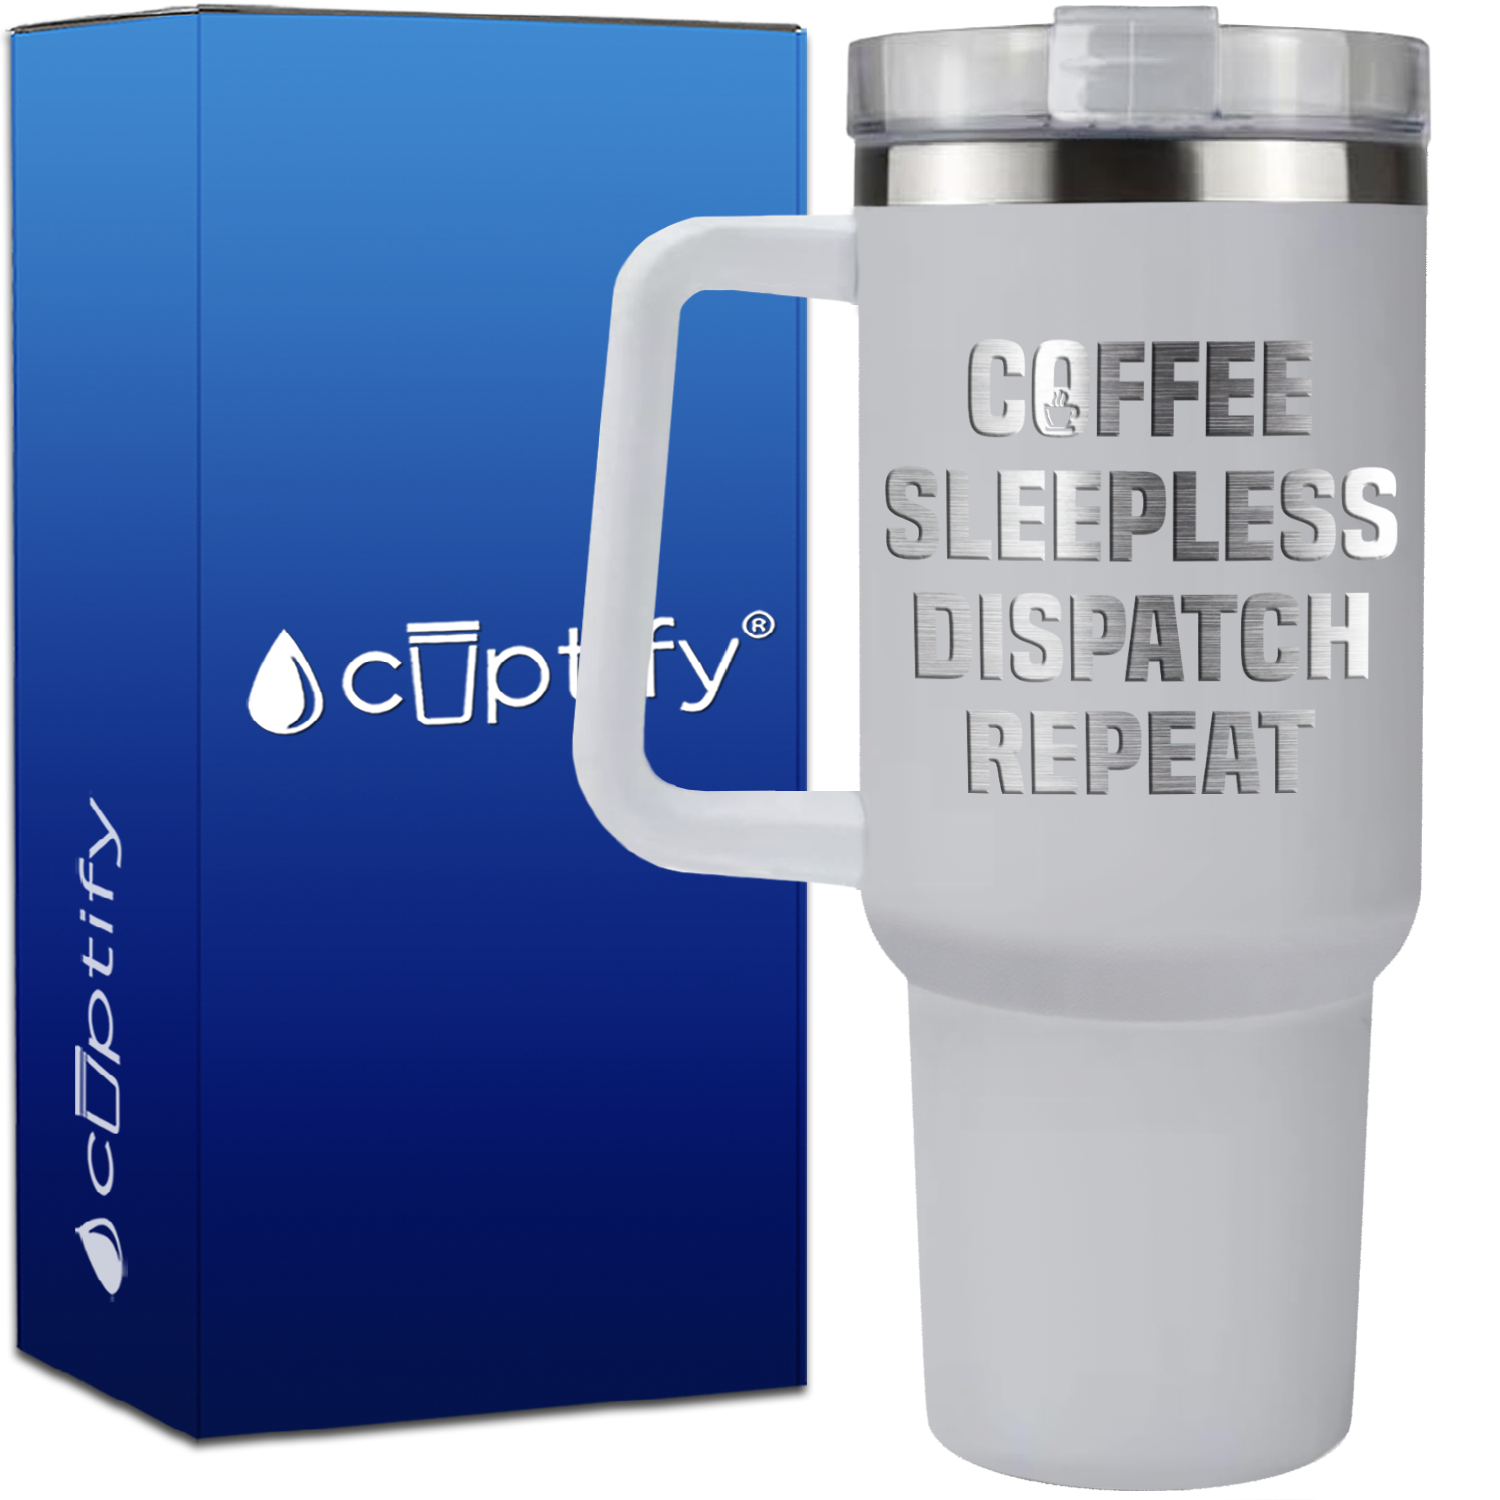 Coffee Sleepless Dispatch Repeat on 40oz Dispatcher Traveler Mug